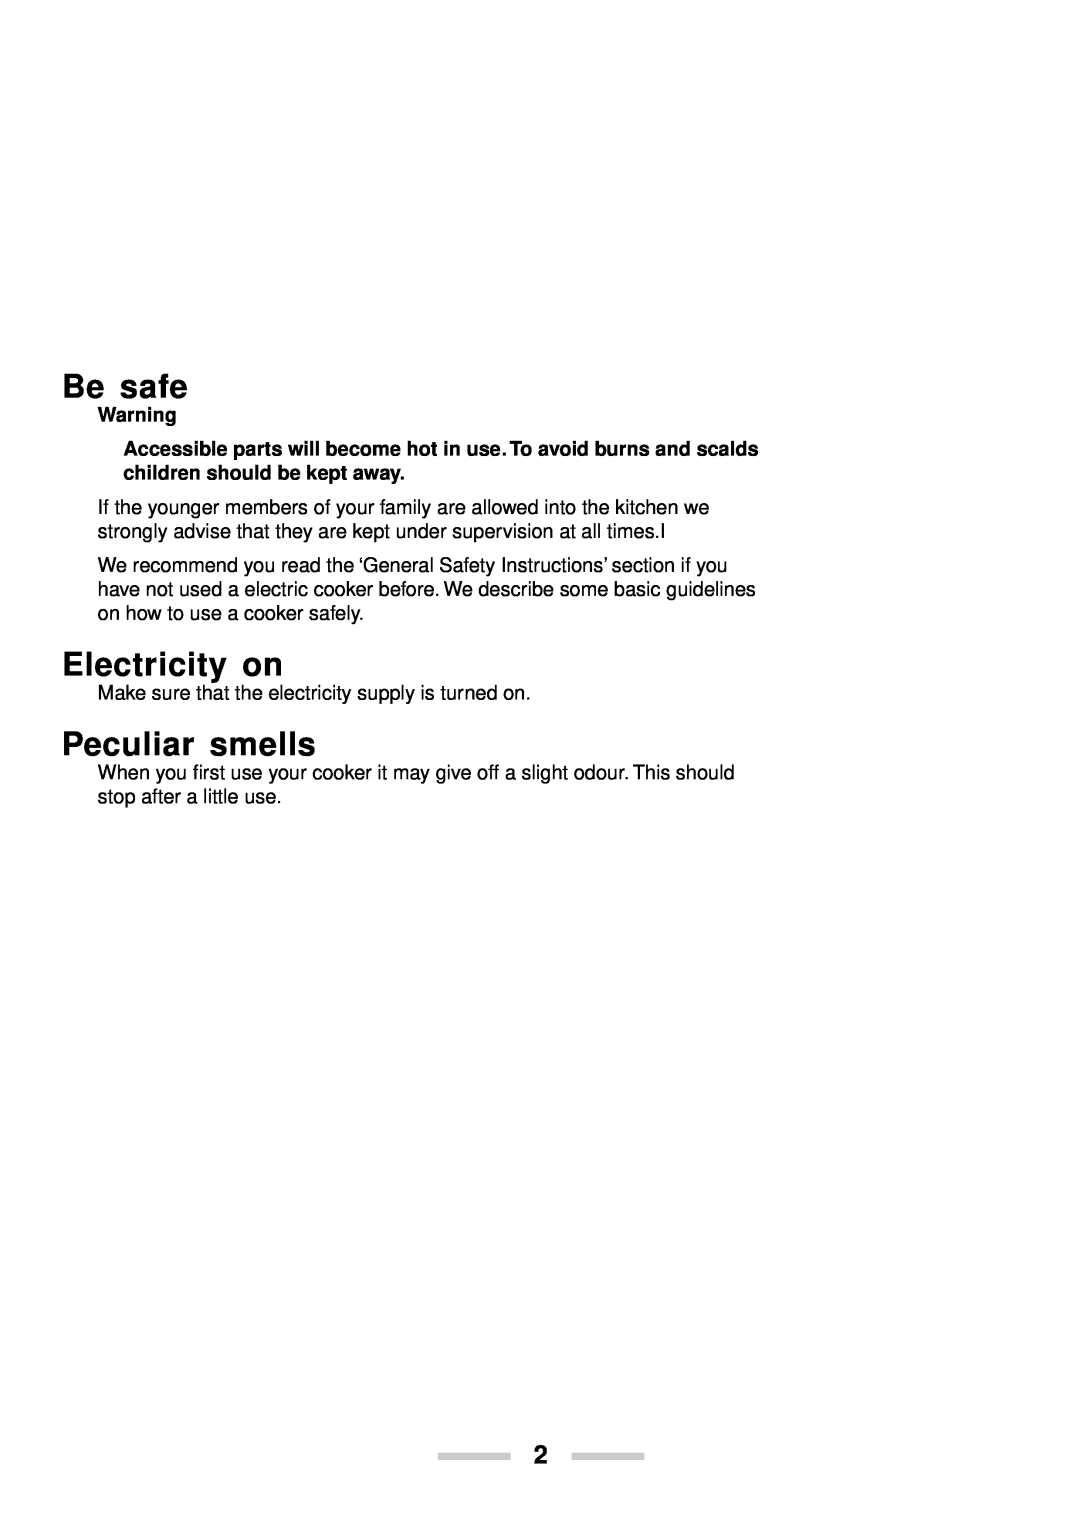 Rangemaster U102210-04 manual Be safe, Electricity on, Peculiar smells 